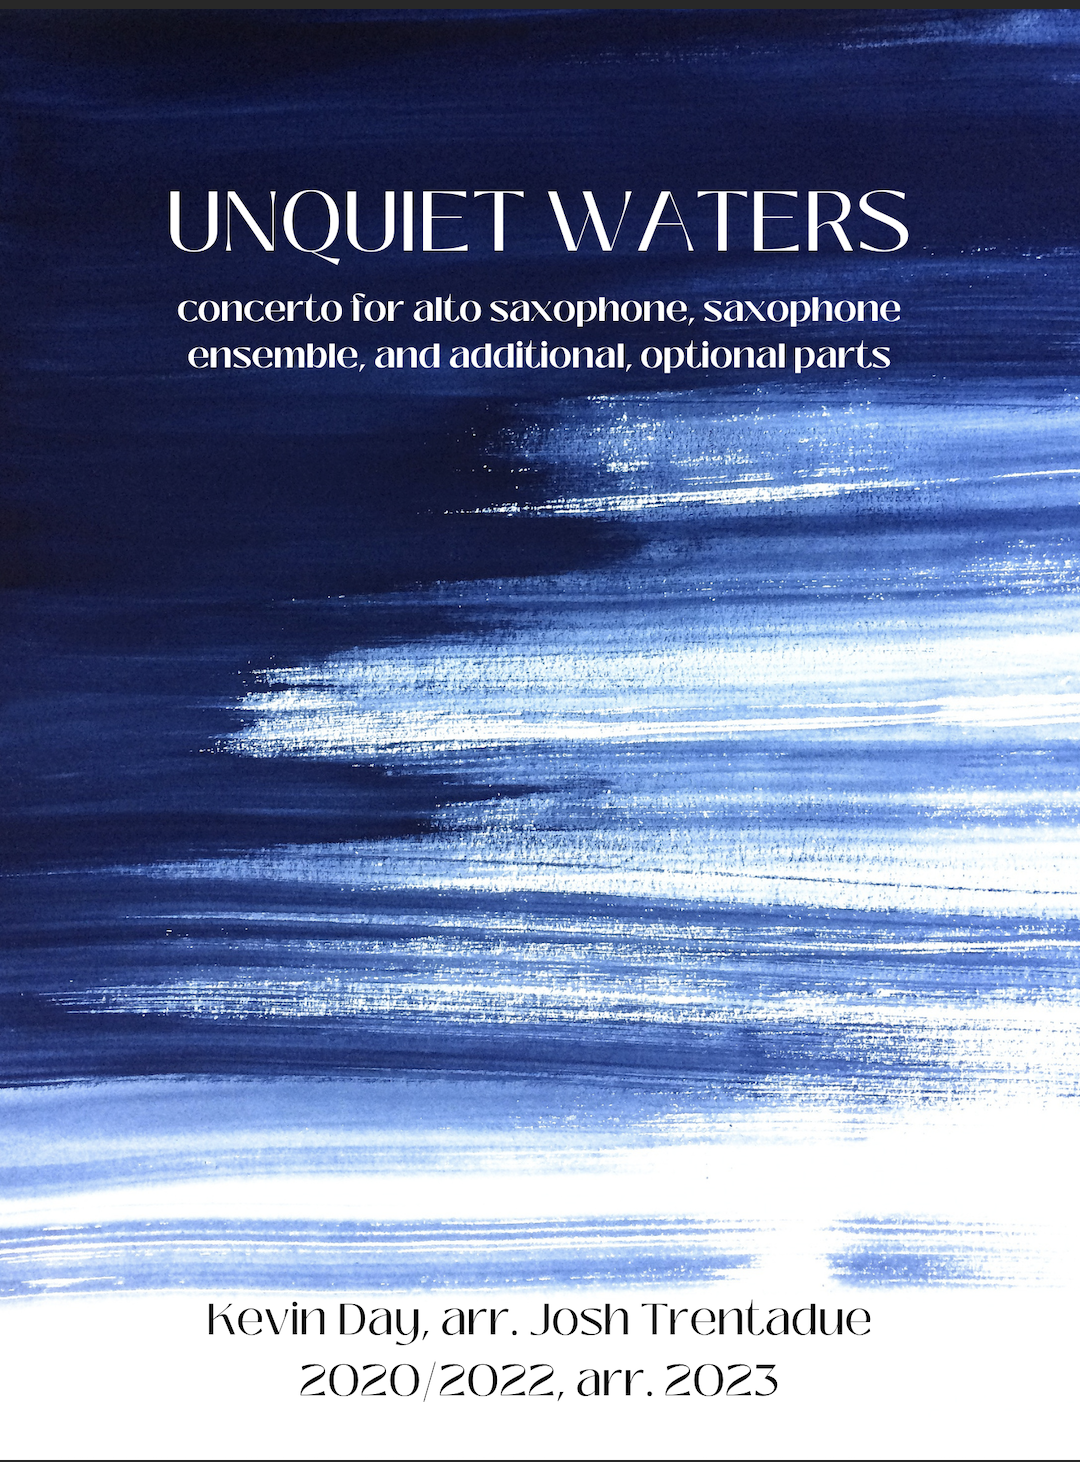 Unquiet Waters (Saxophone Choir Version) by Kevin Day arr. Josh Trentadue